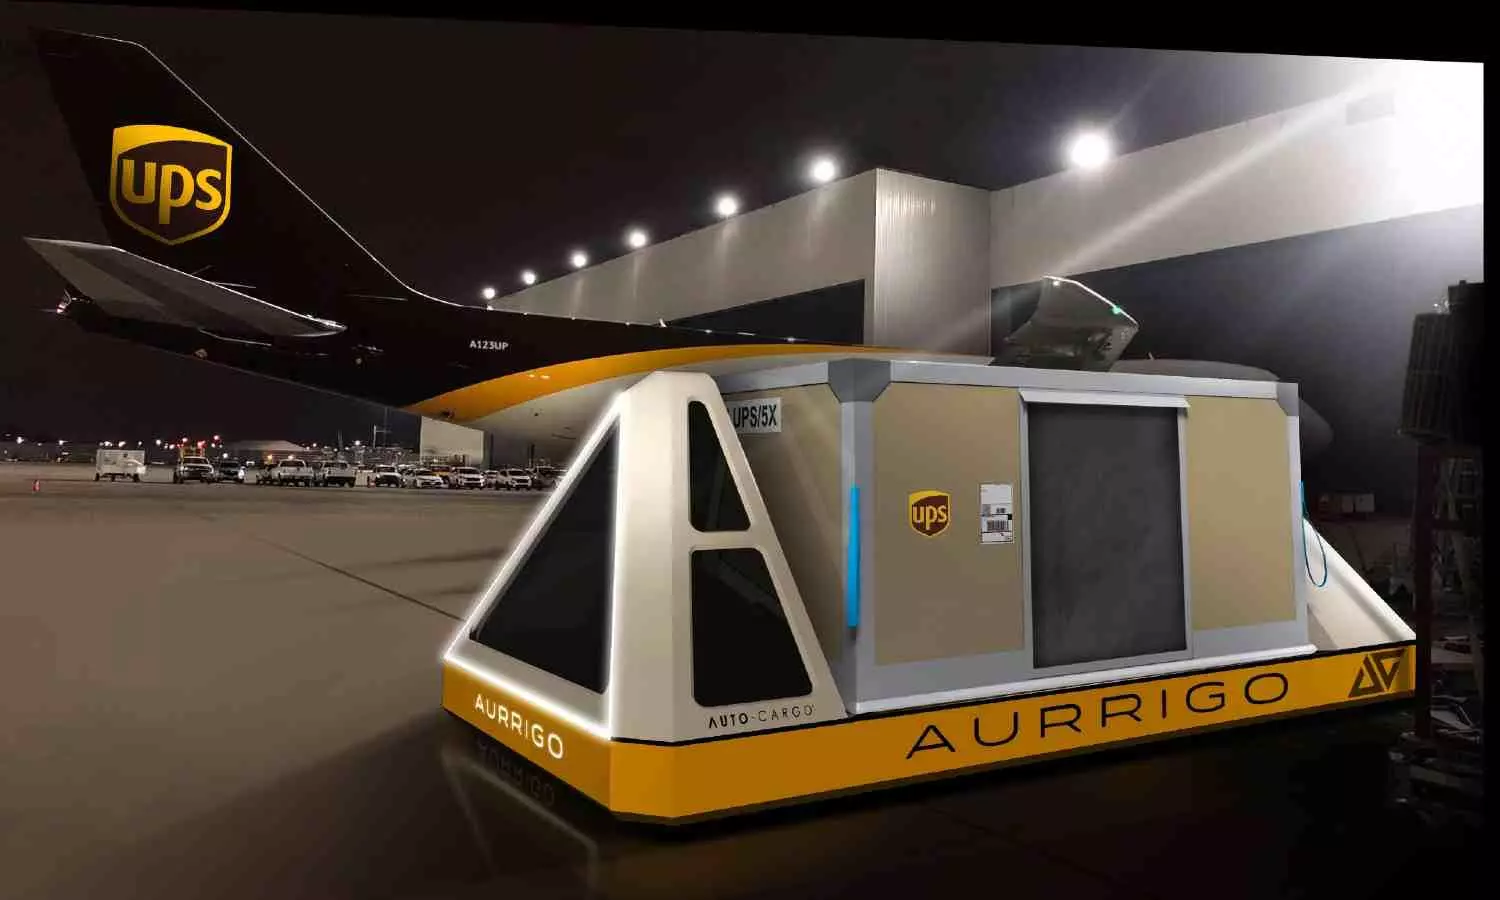 Aurrigo, UPS partner for electric cargo vehicle programme